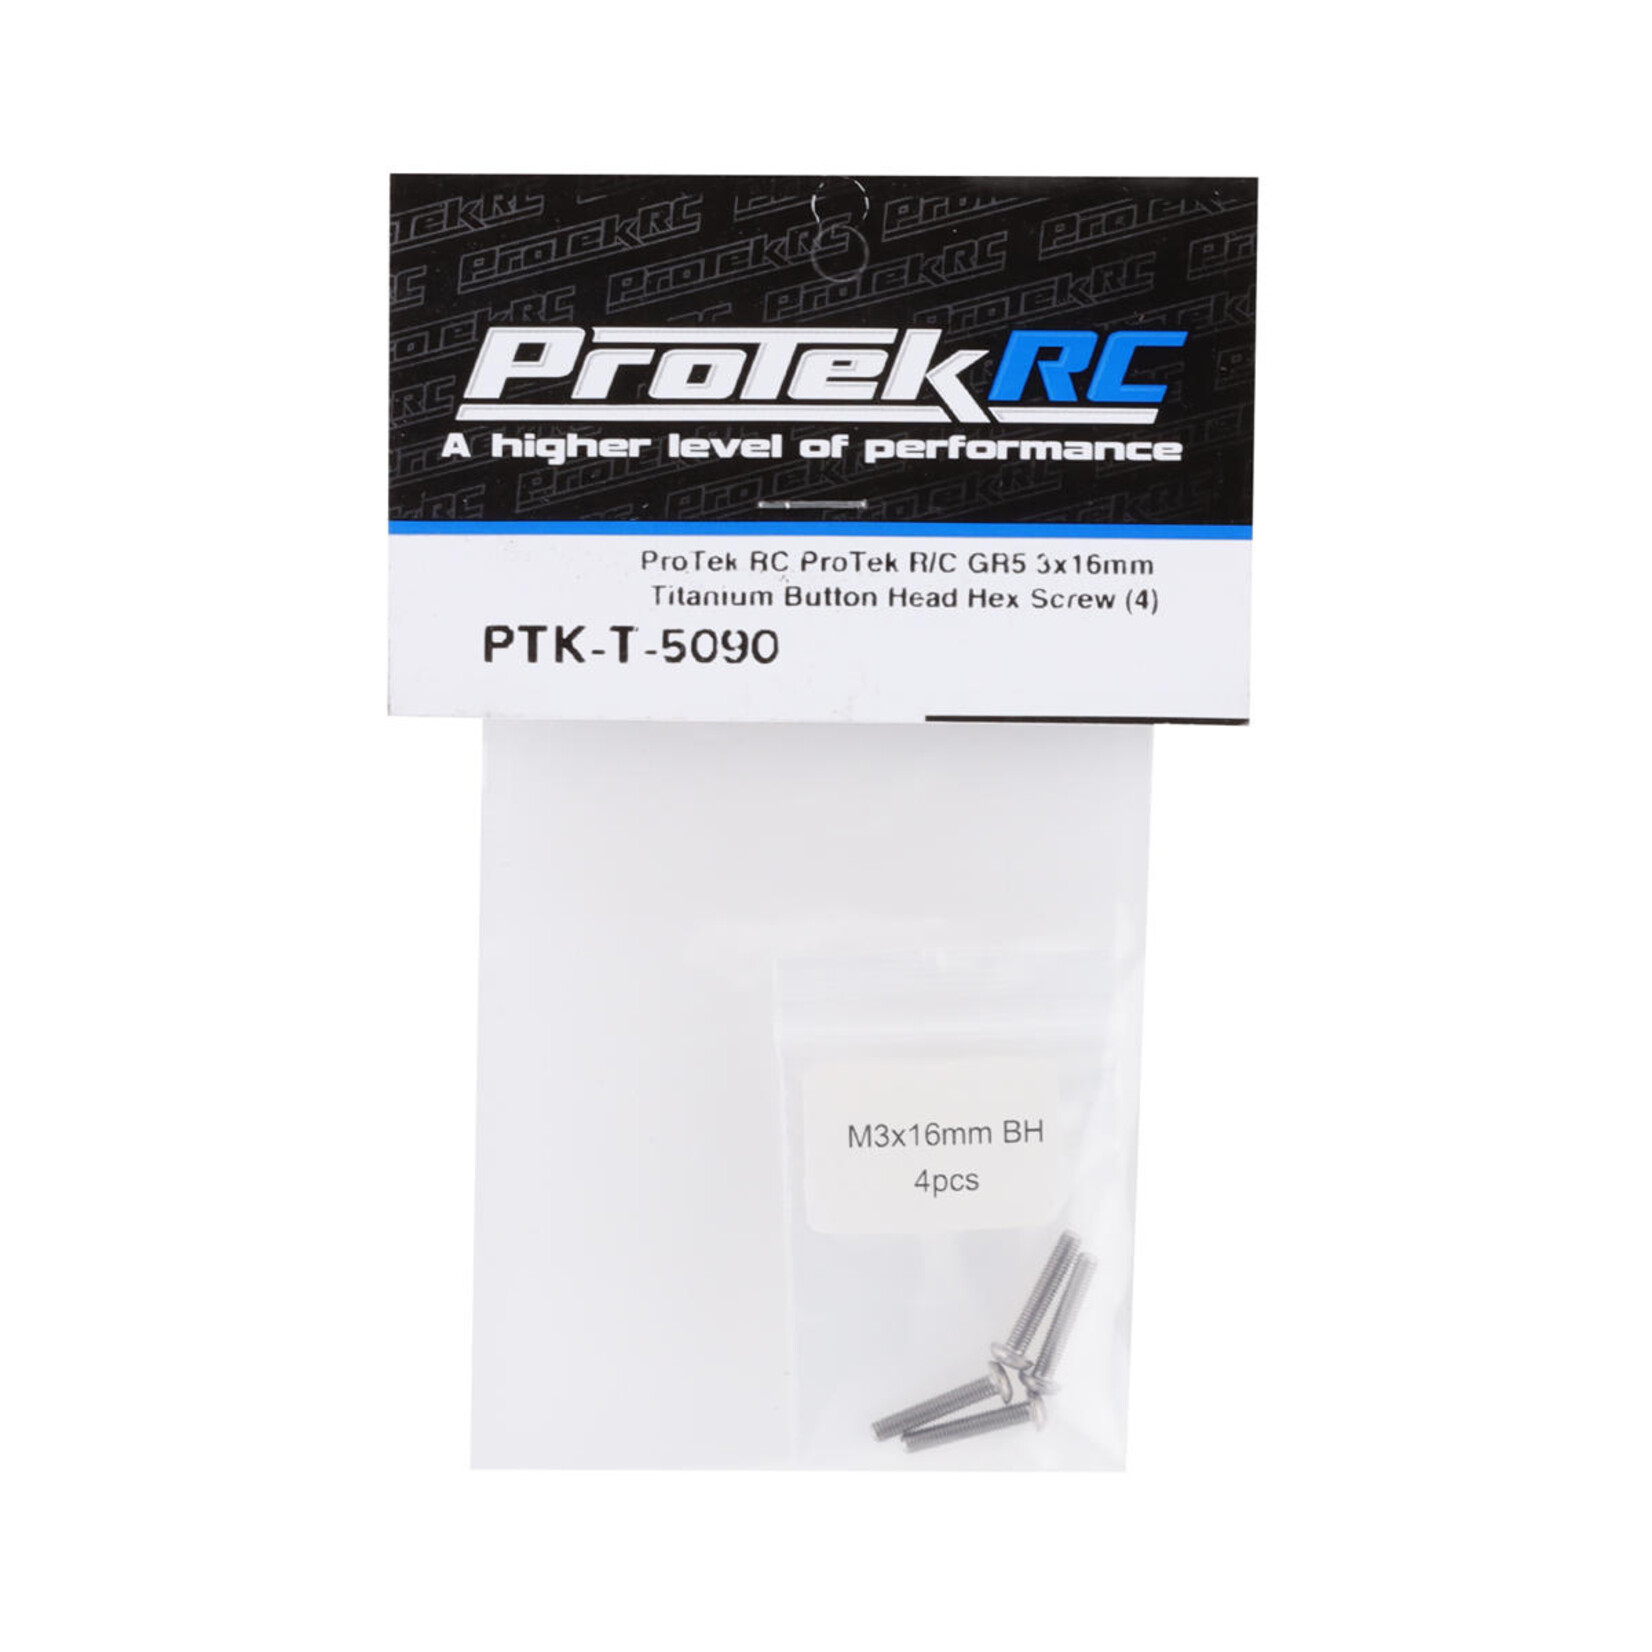 ProTek RC ProTek RC 3x16mm "Grade 5" Titanium Button Head Hex Screw (4) #PTK-T-5090